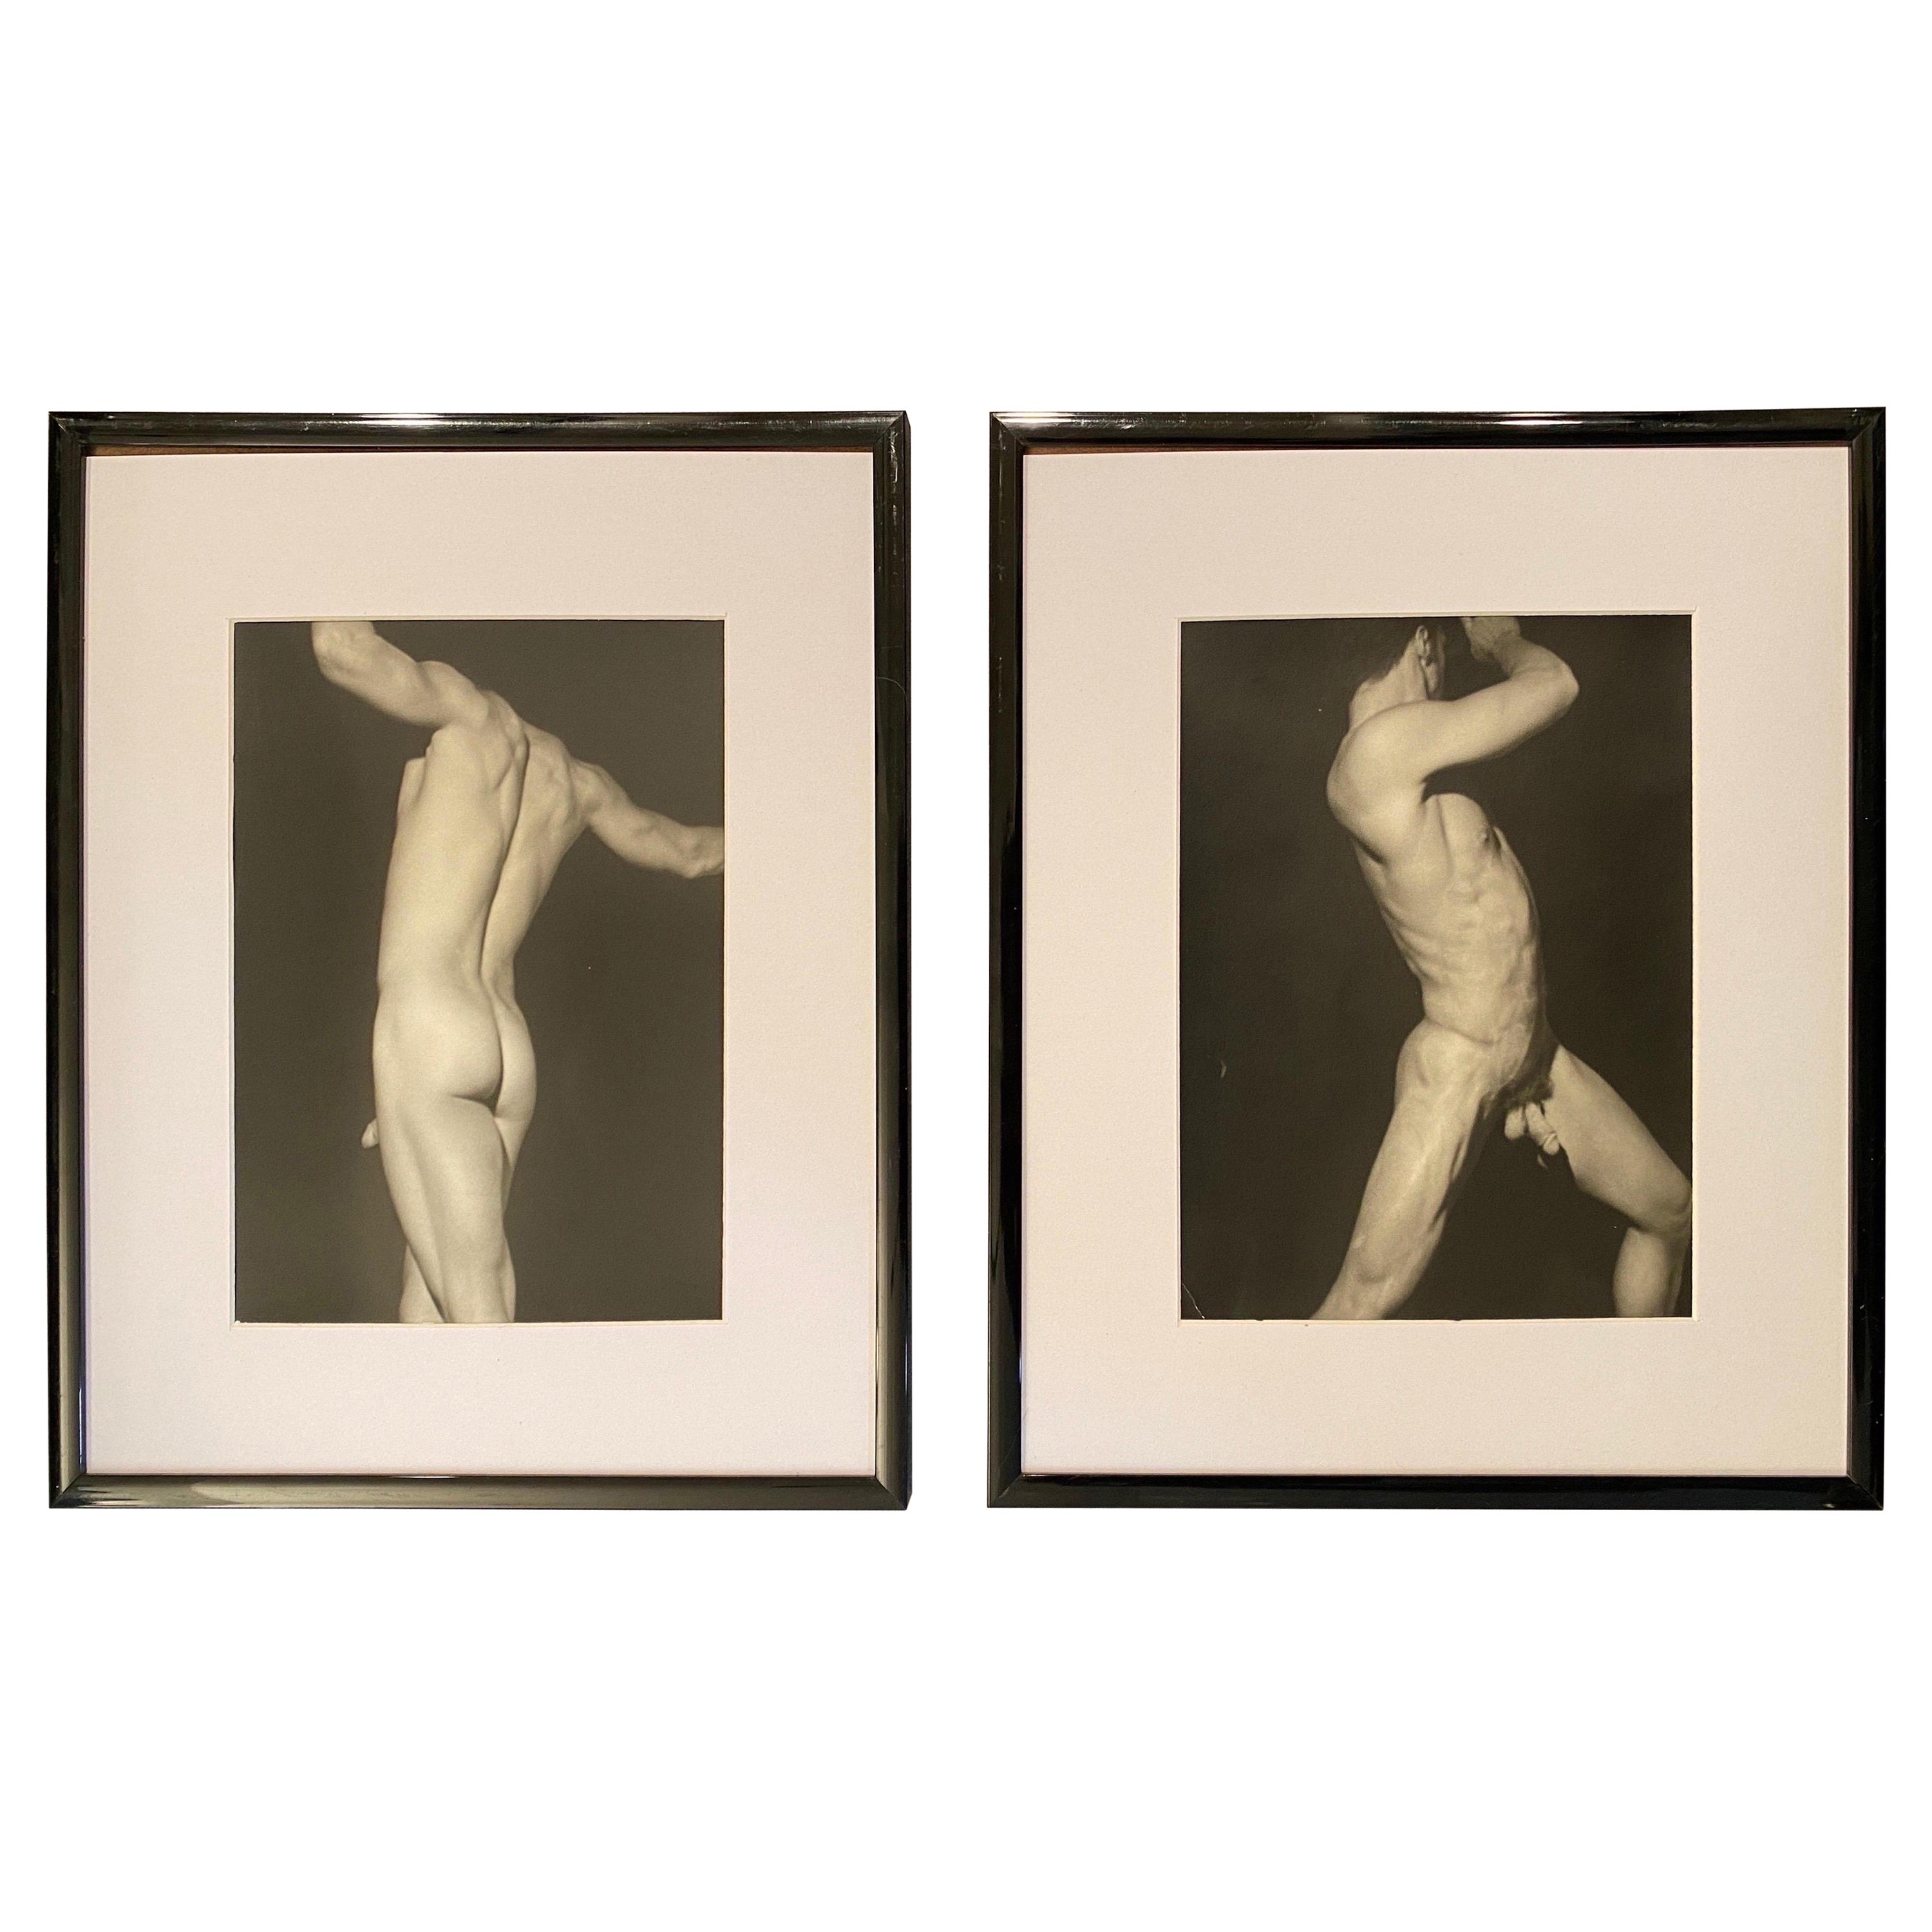 Pair of Original B&W Male Nude Silver Gelatin Photographs 1996 by George Machado For Sale